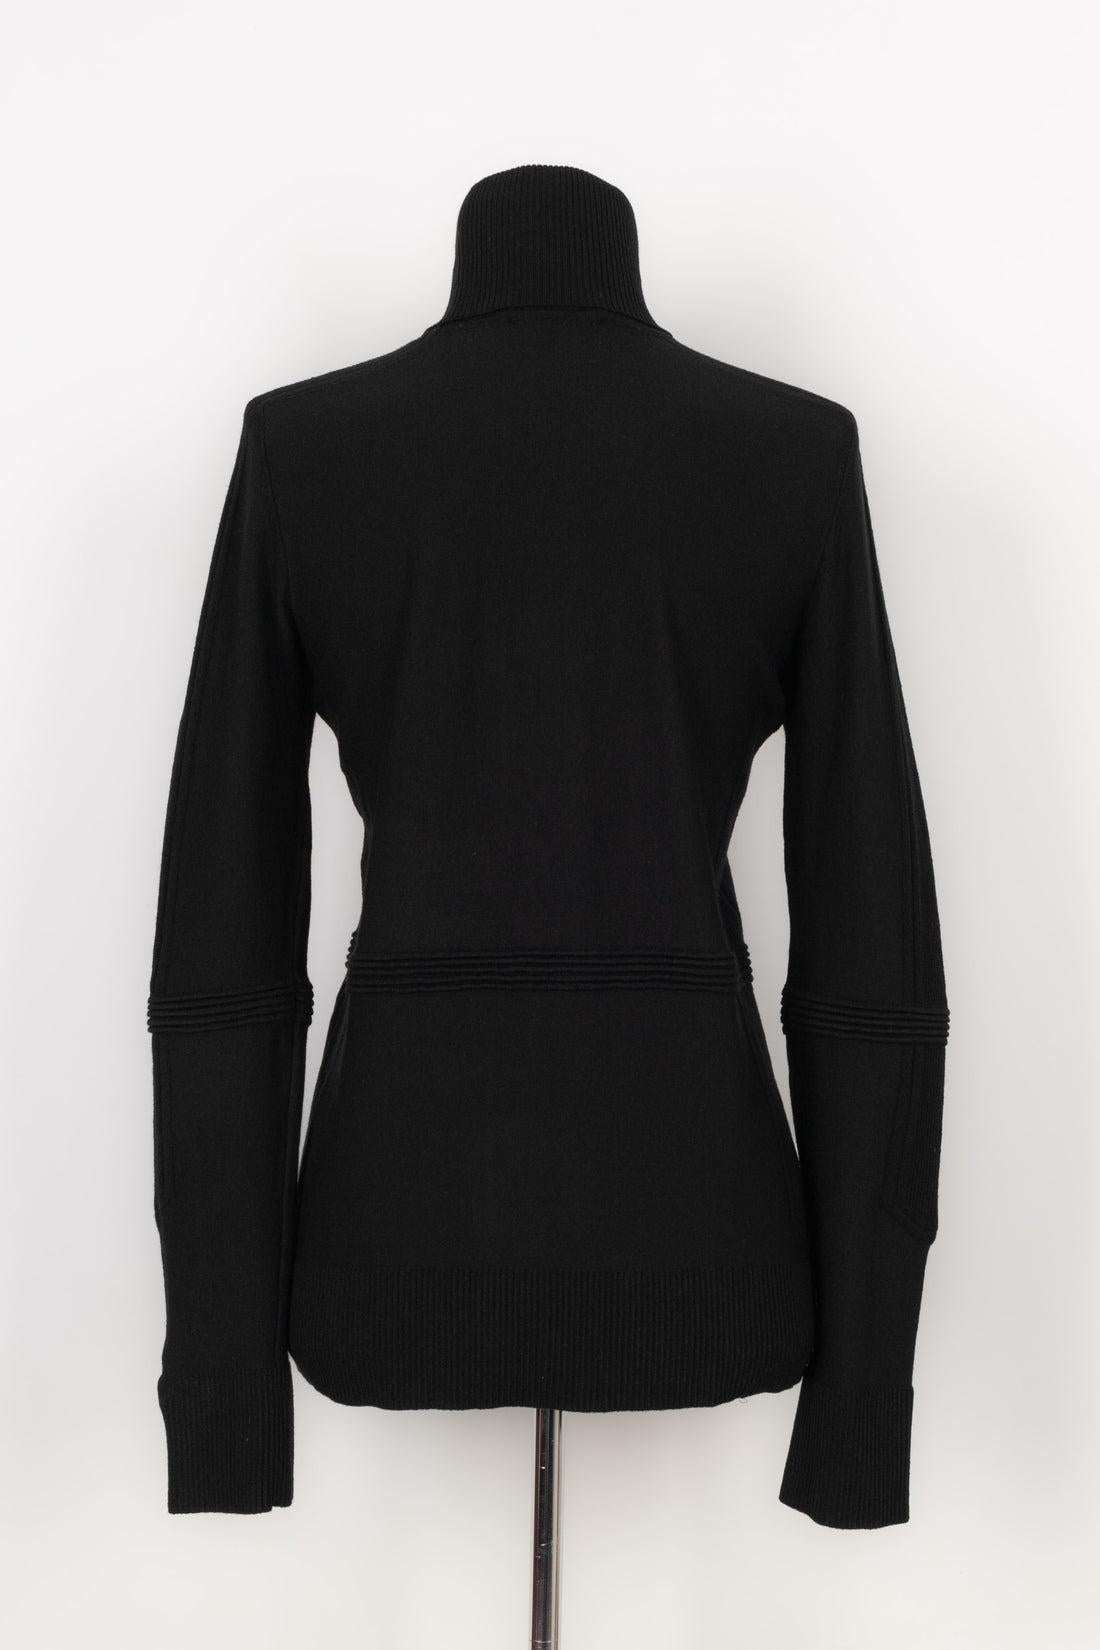 Women's Chanel Black Pullover in Black Wool Turtleneck  For Sale